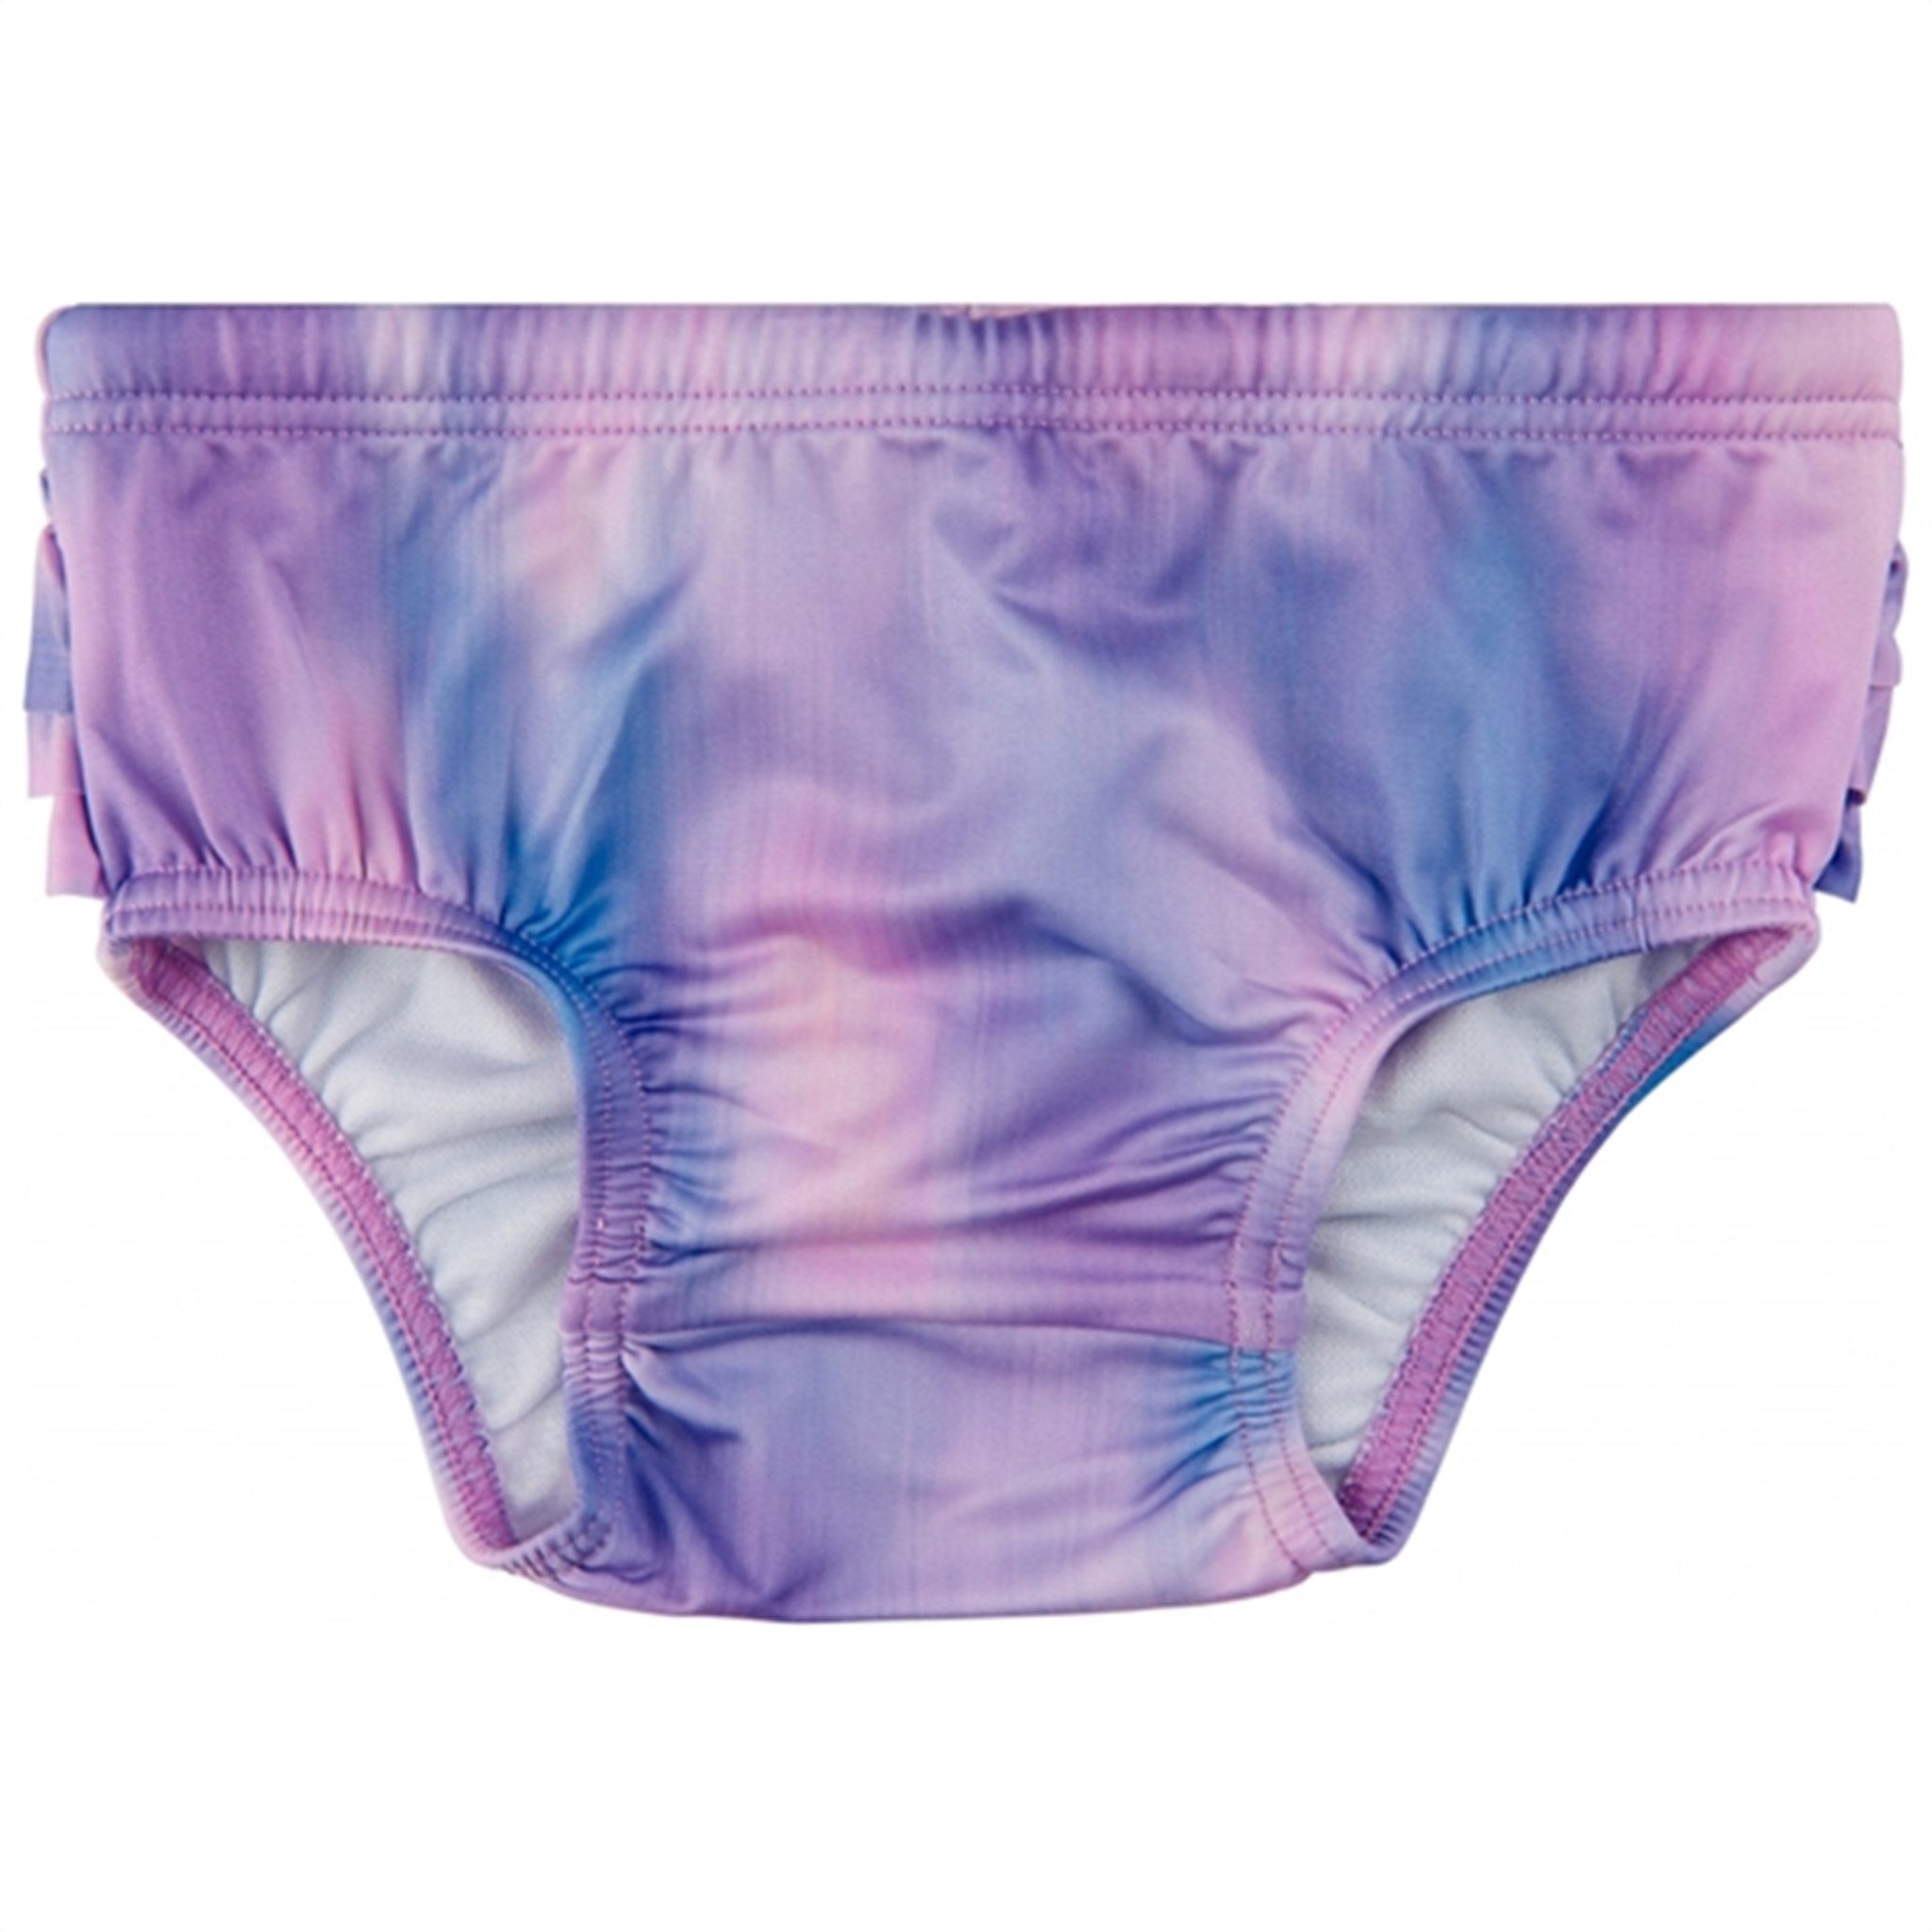 Soft Gallery Orchid Bloom Mina Reflections Purple Swim Pants